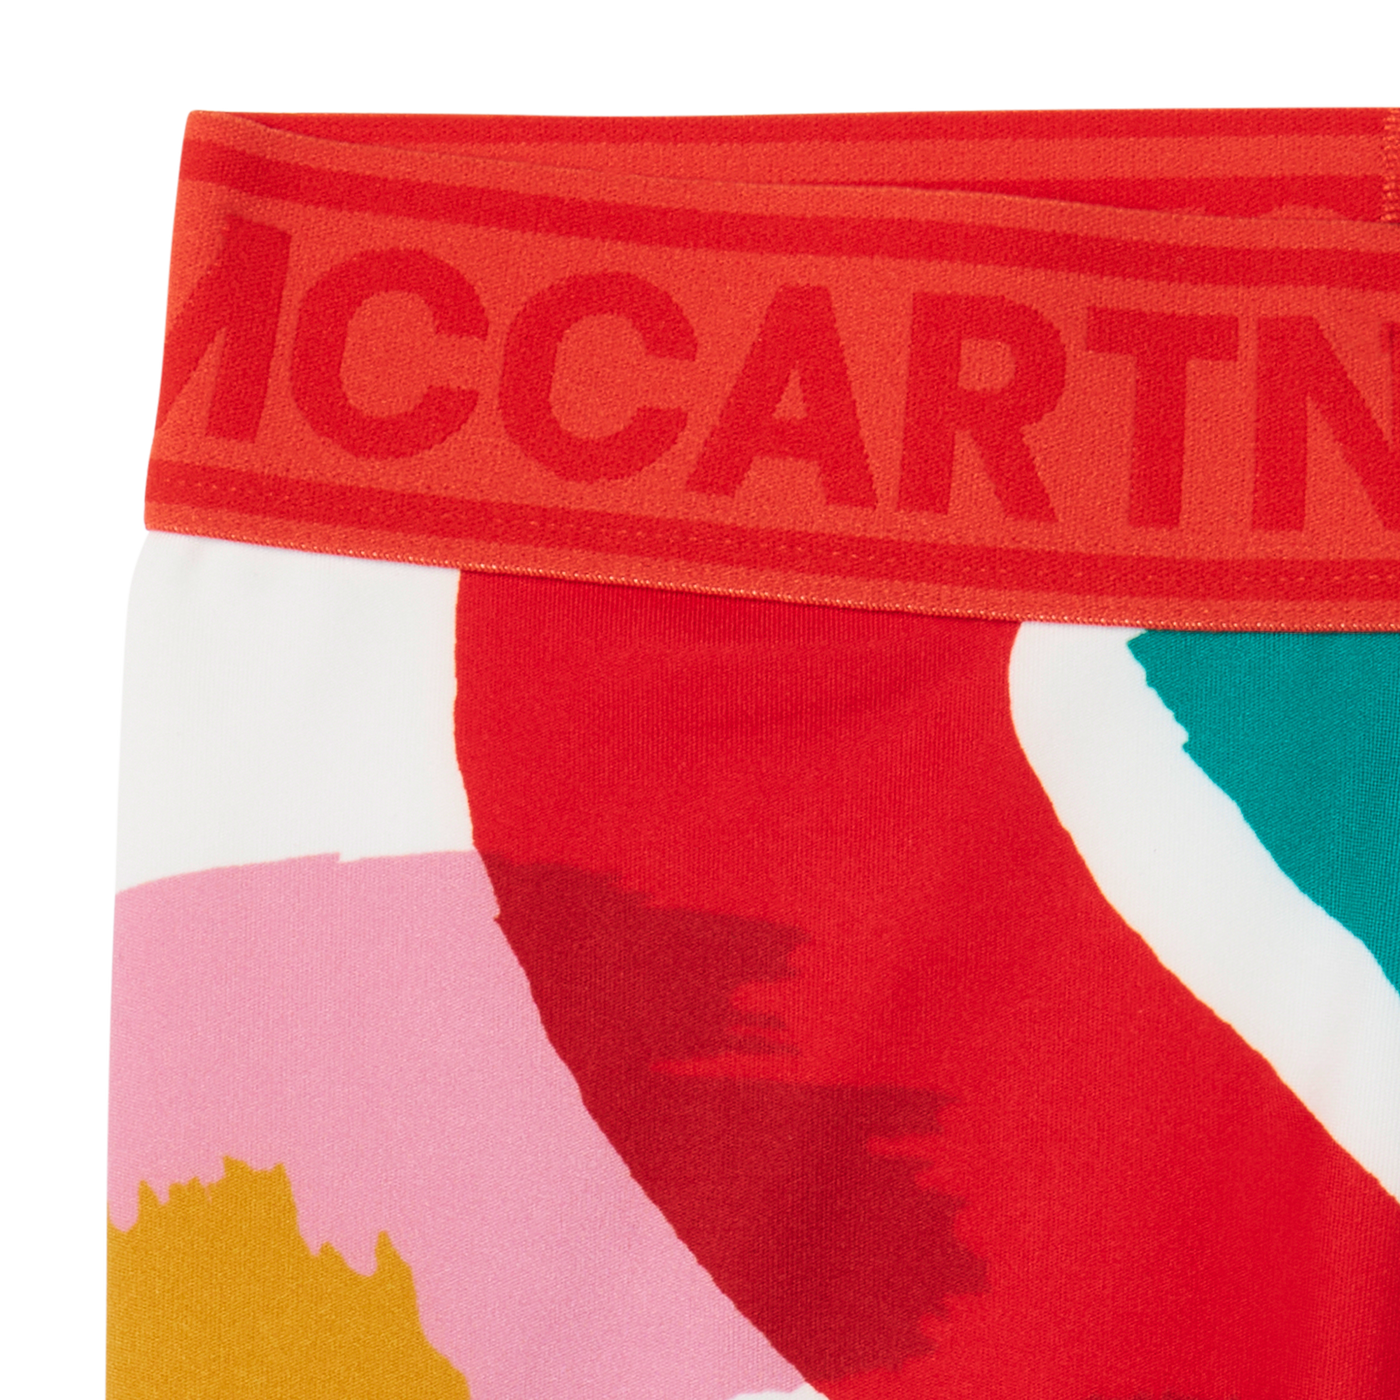 Stella McCartney Kids - Printed leggings